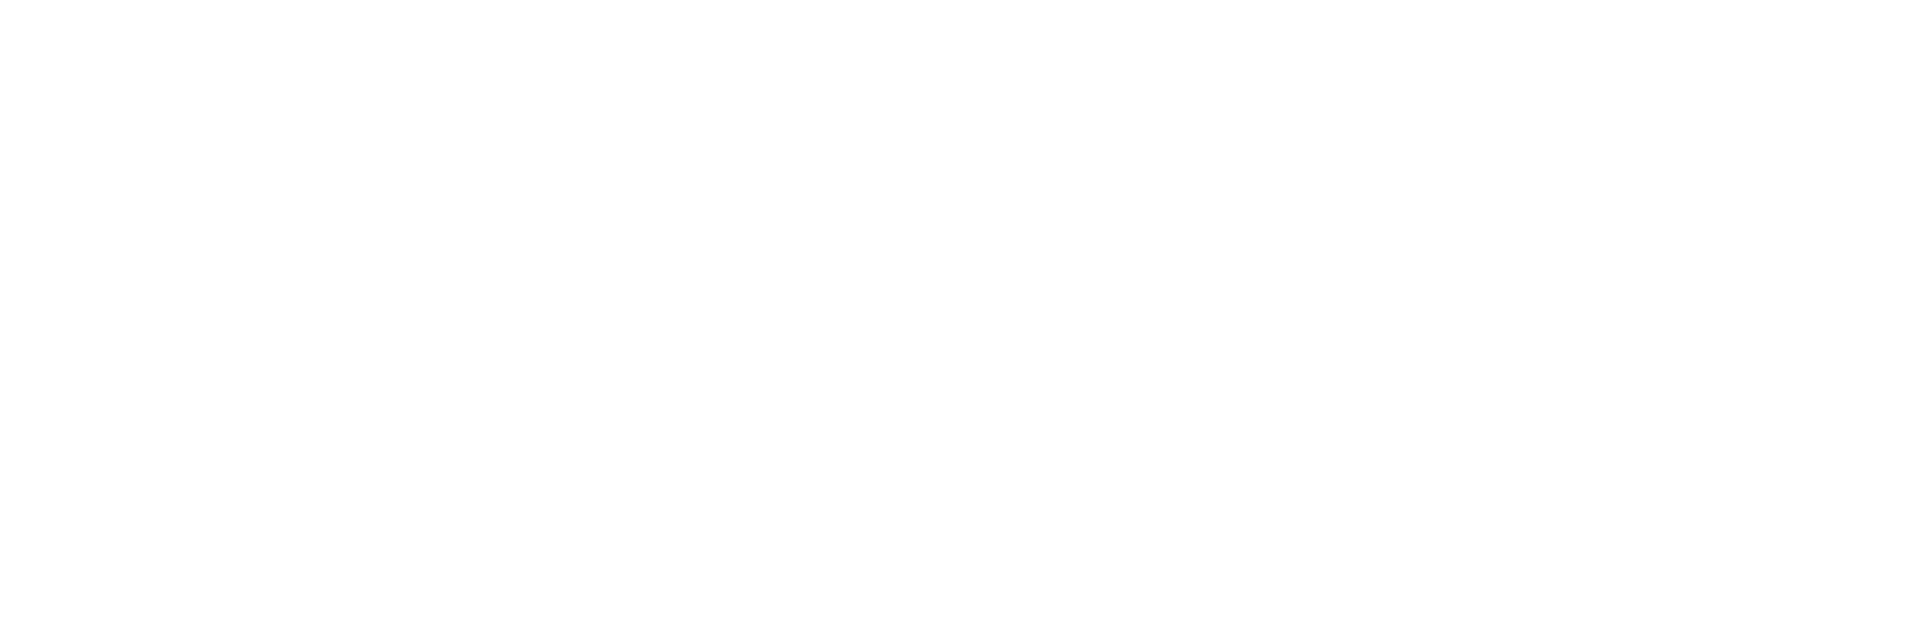 Presstok-engineering tools logo